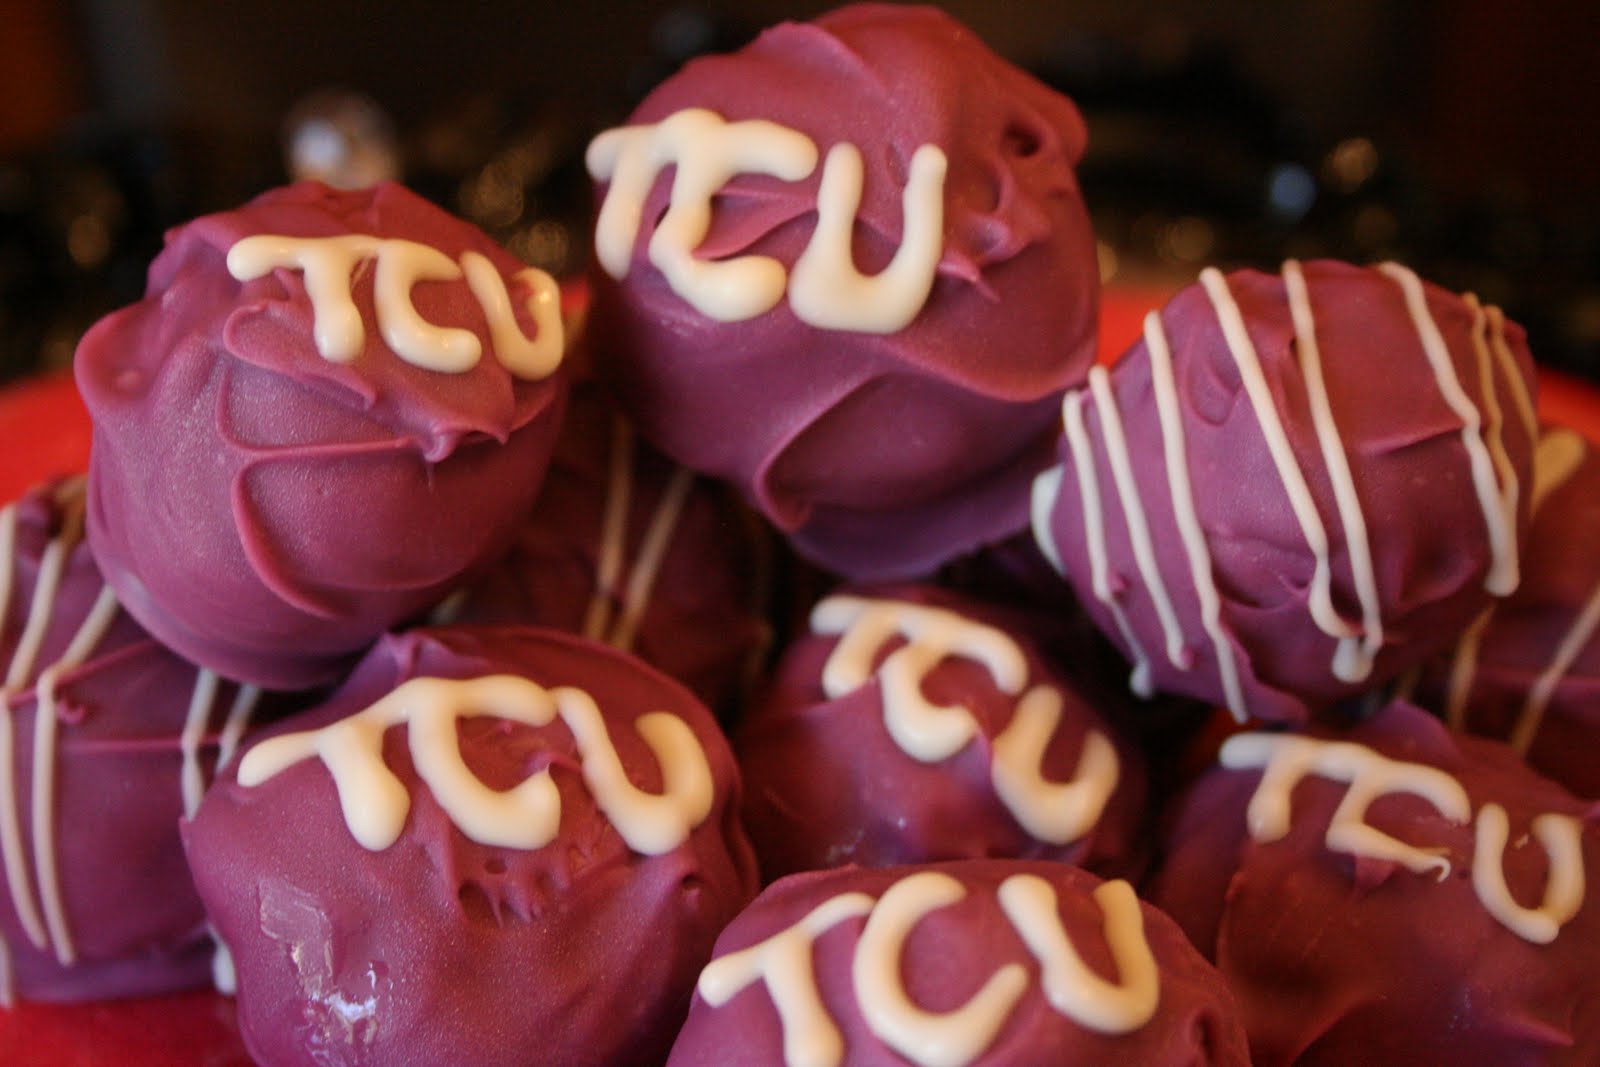 Great TCU Cake Balls